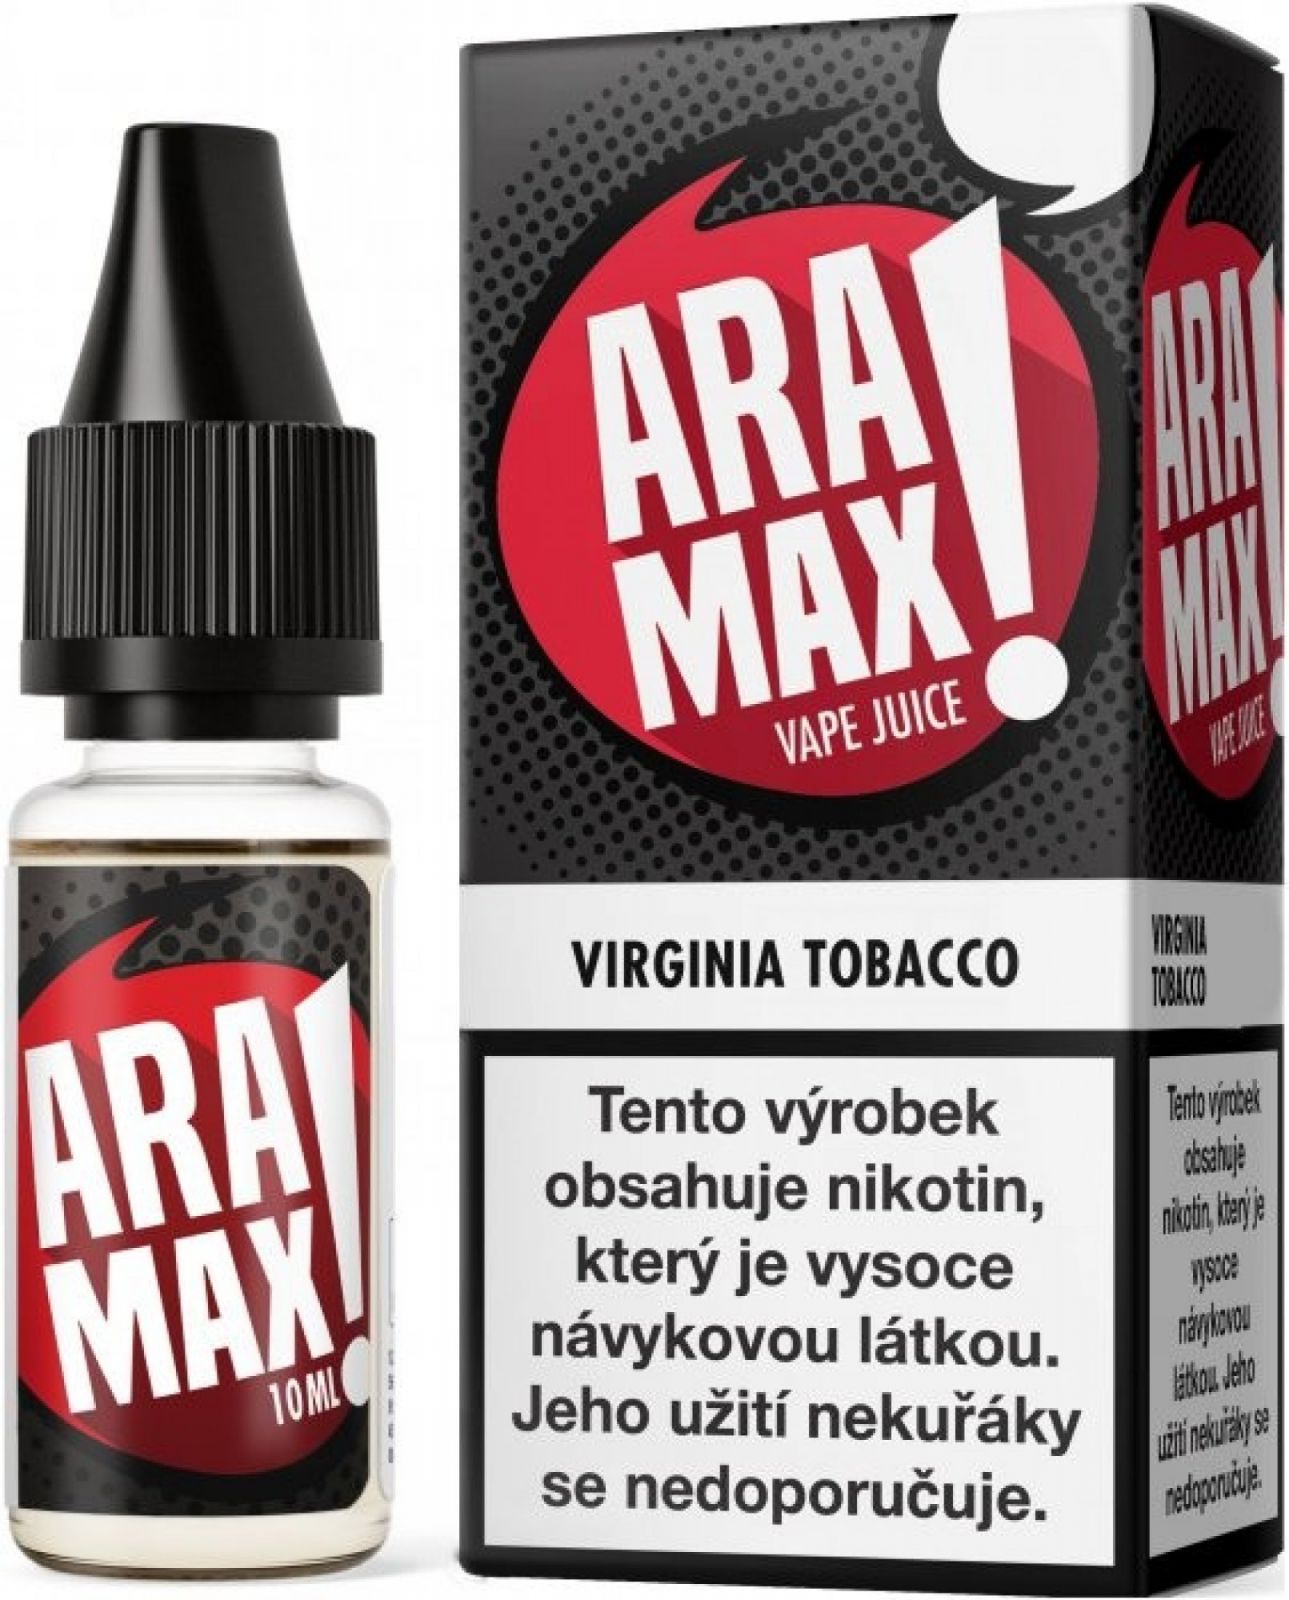 VIRGINIA TOBACCO - Aramax 10 ml